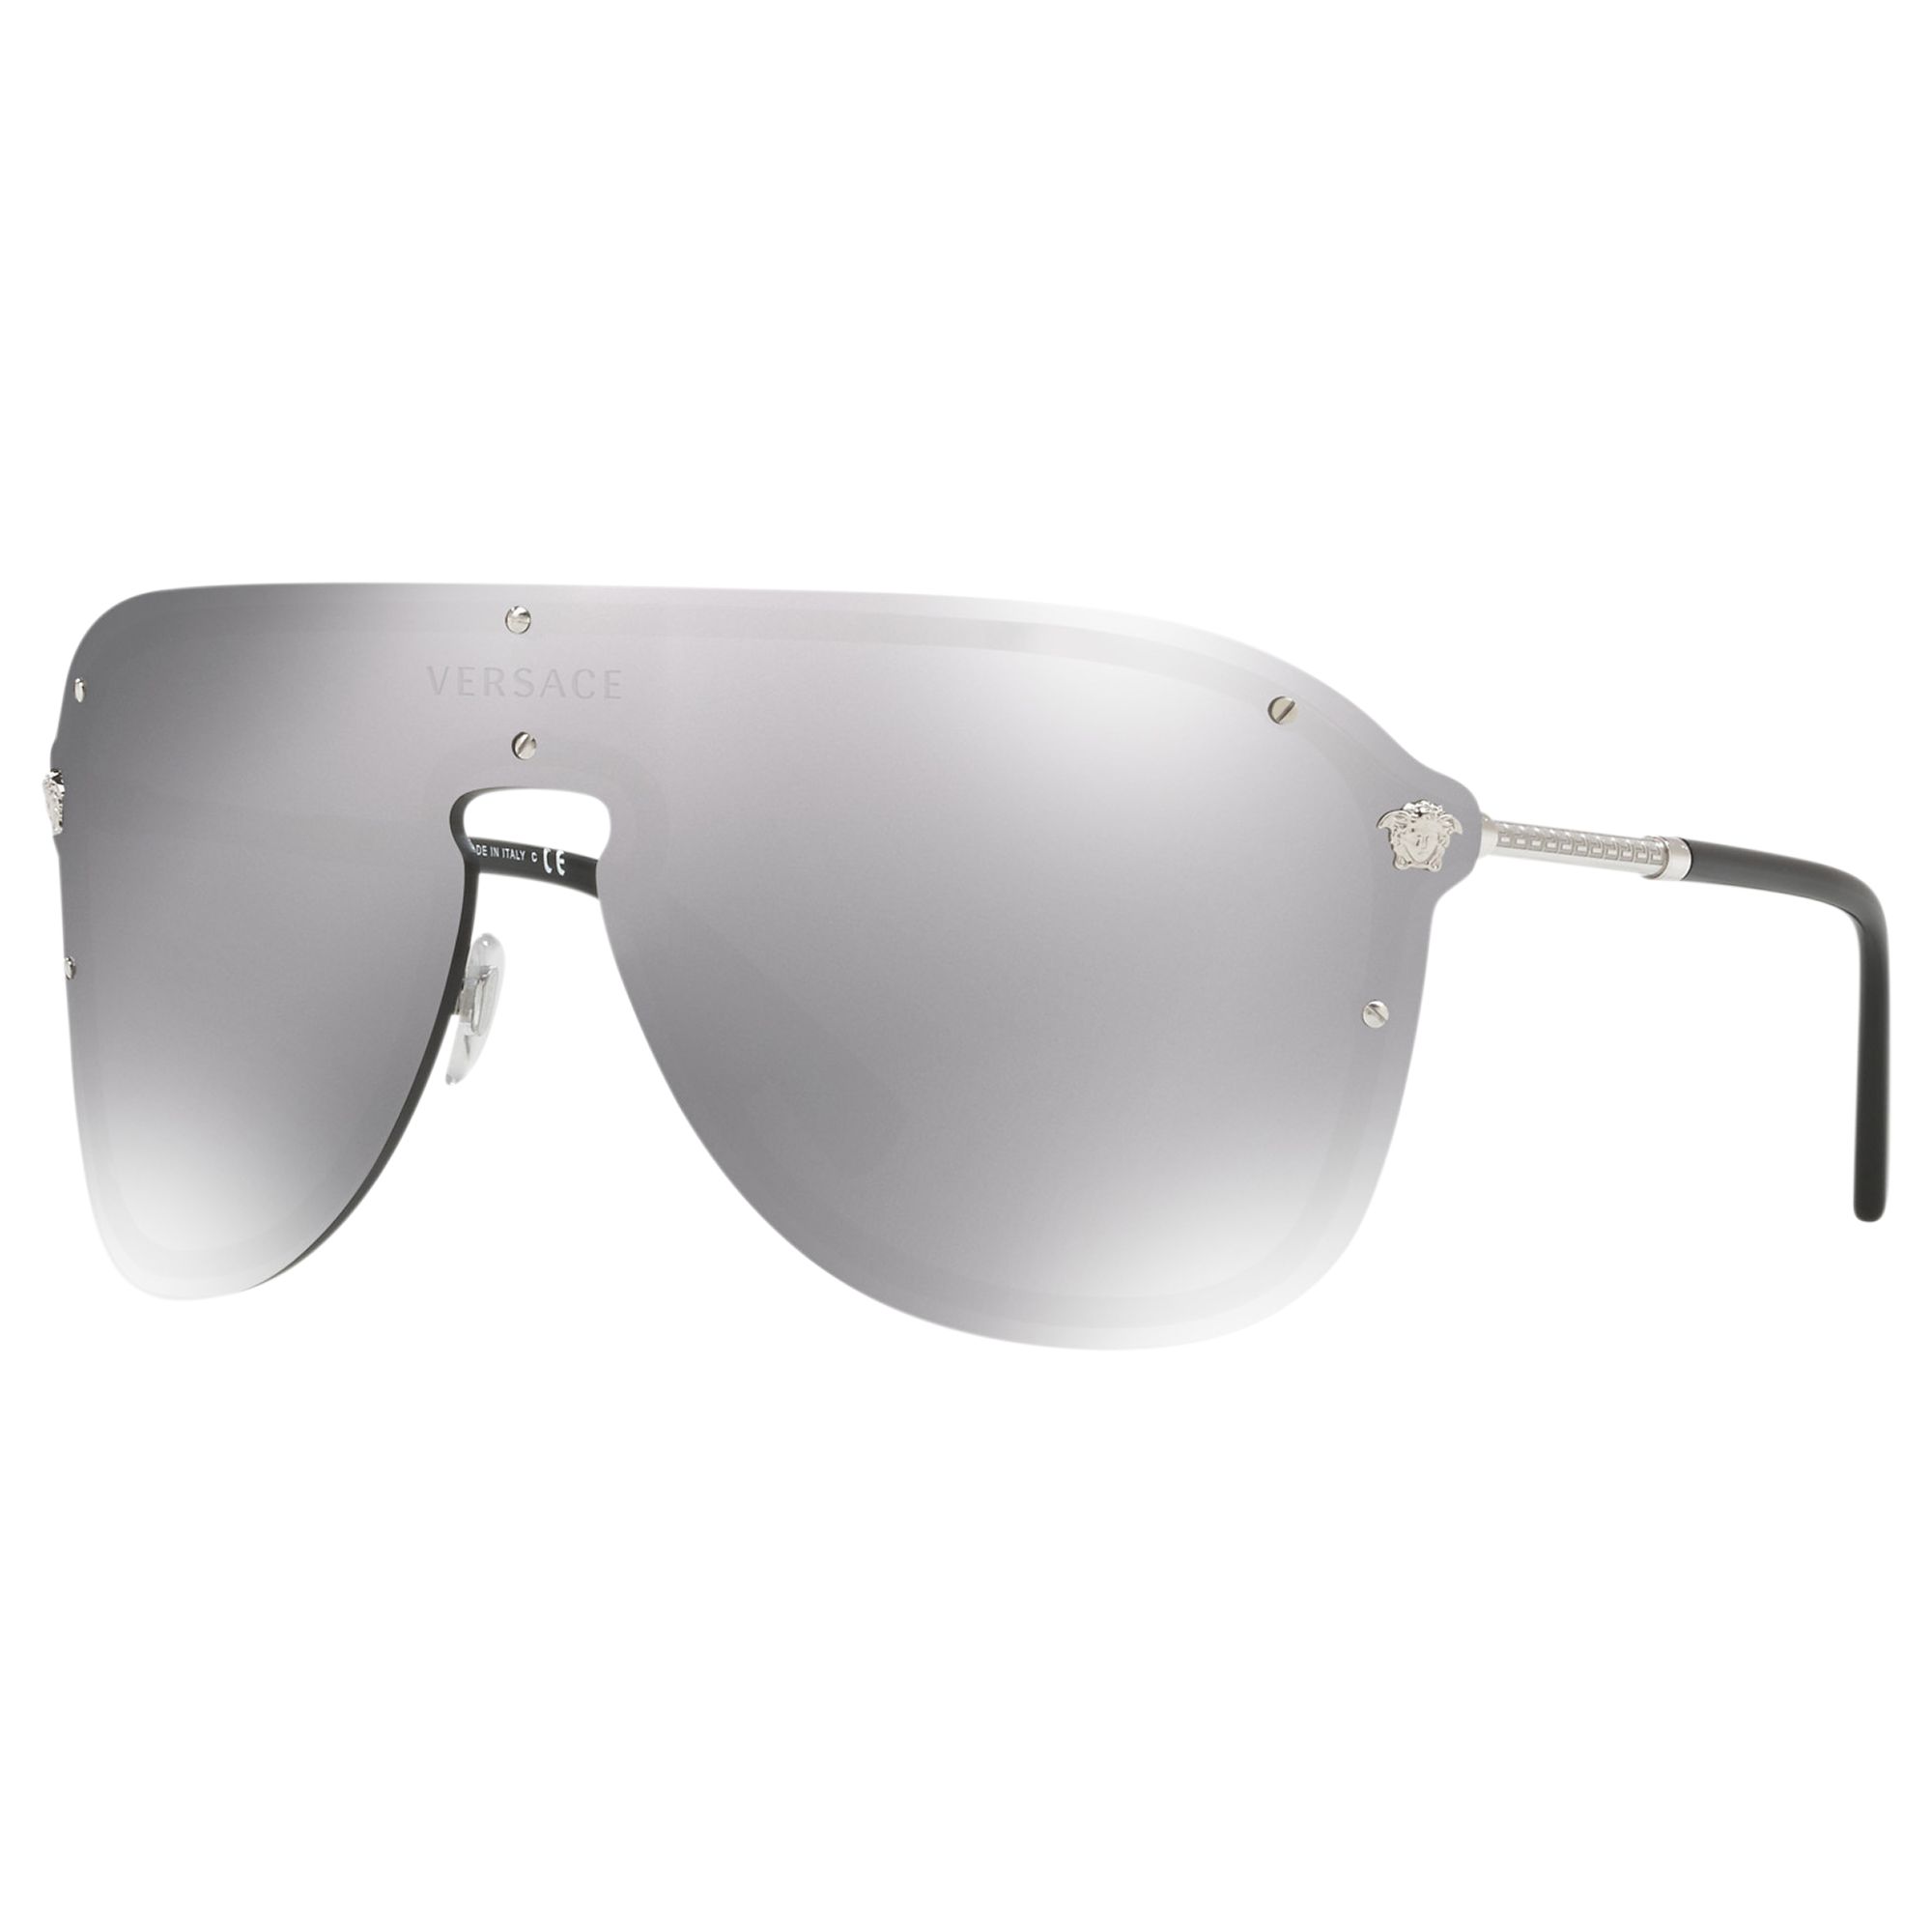 versace aviator sunglasses